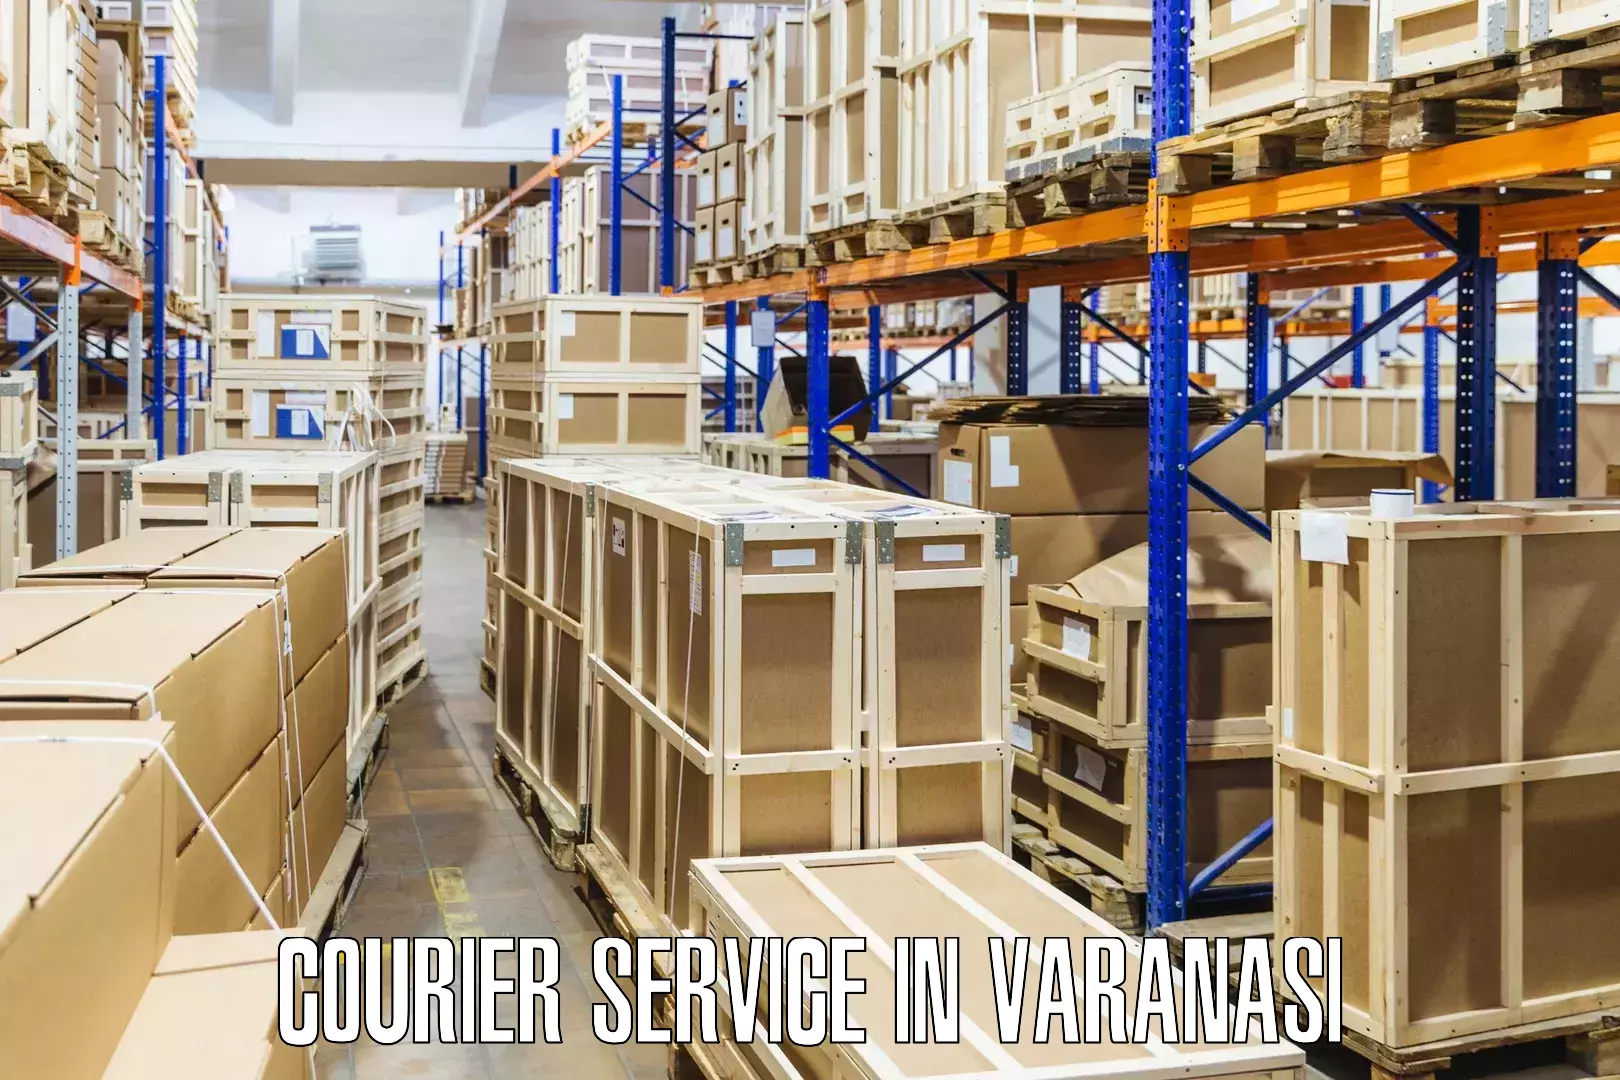 Express courier capabilities in Varanasi